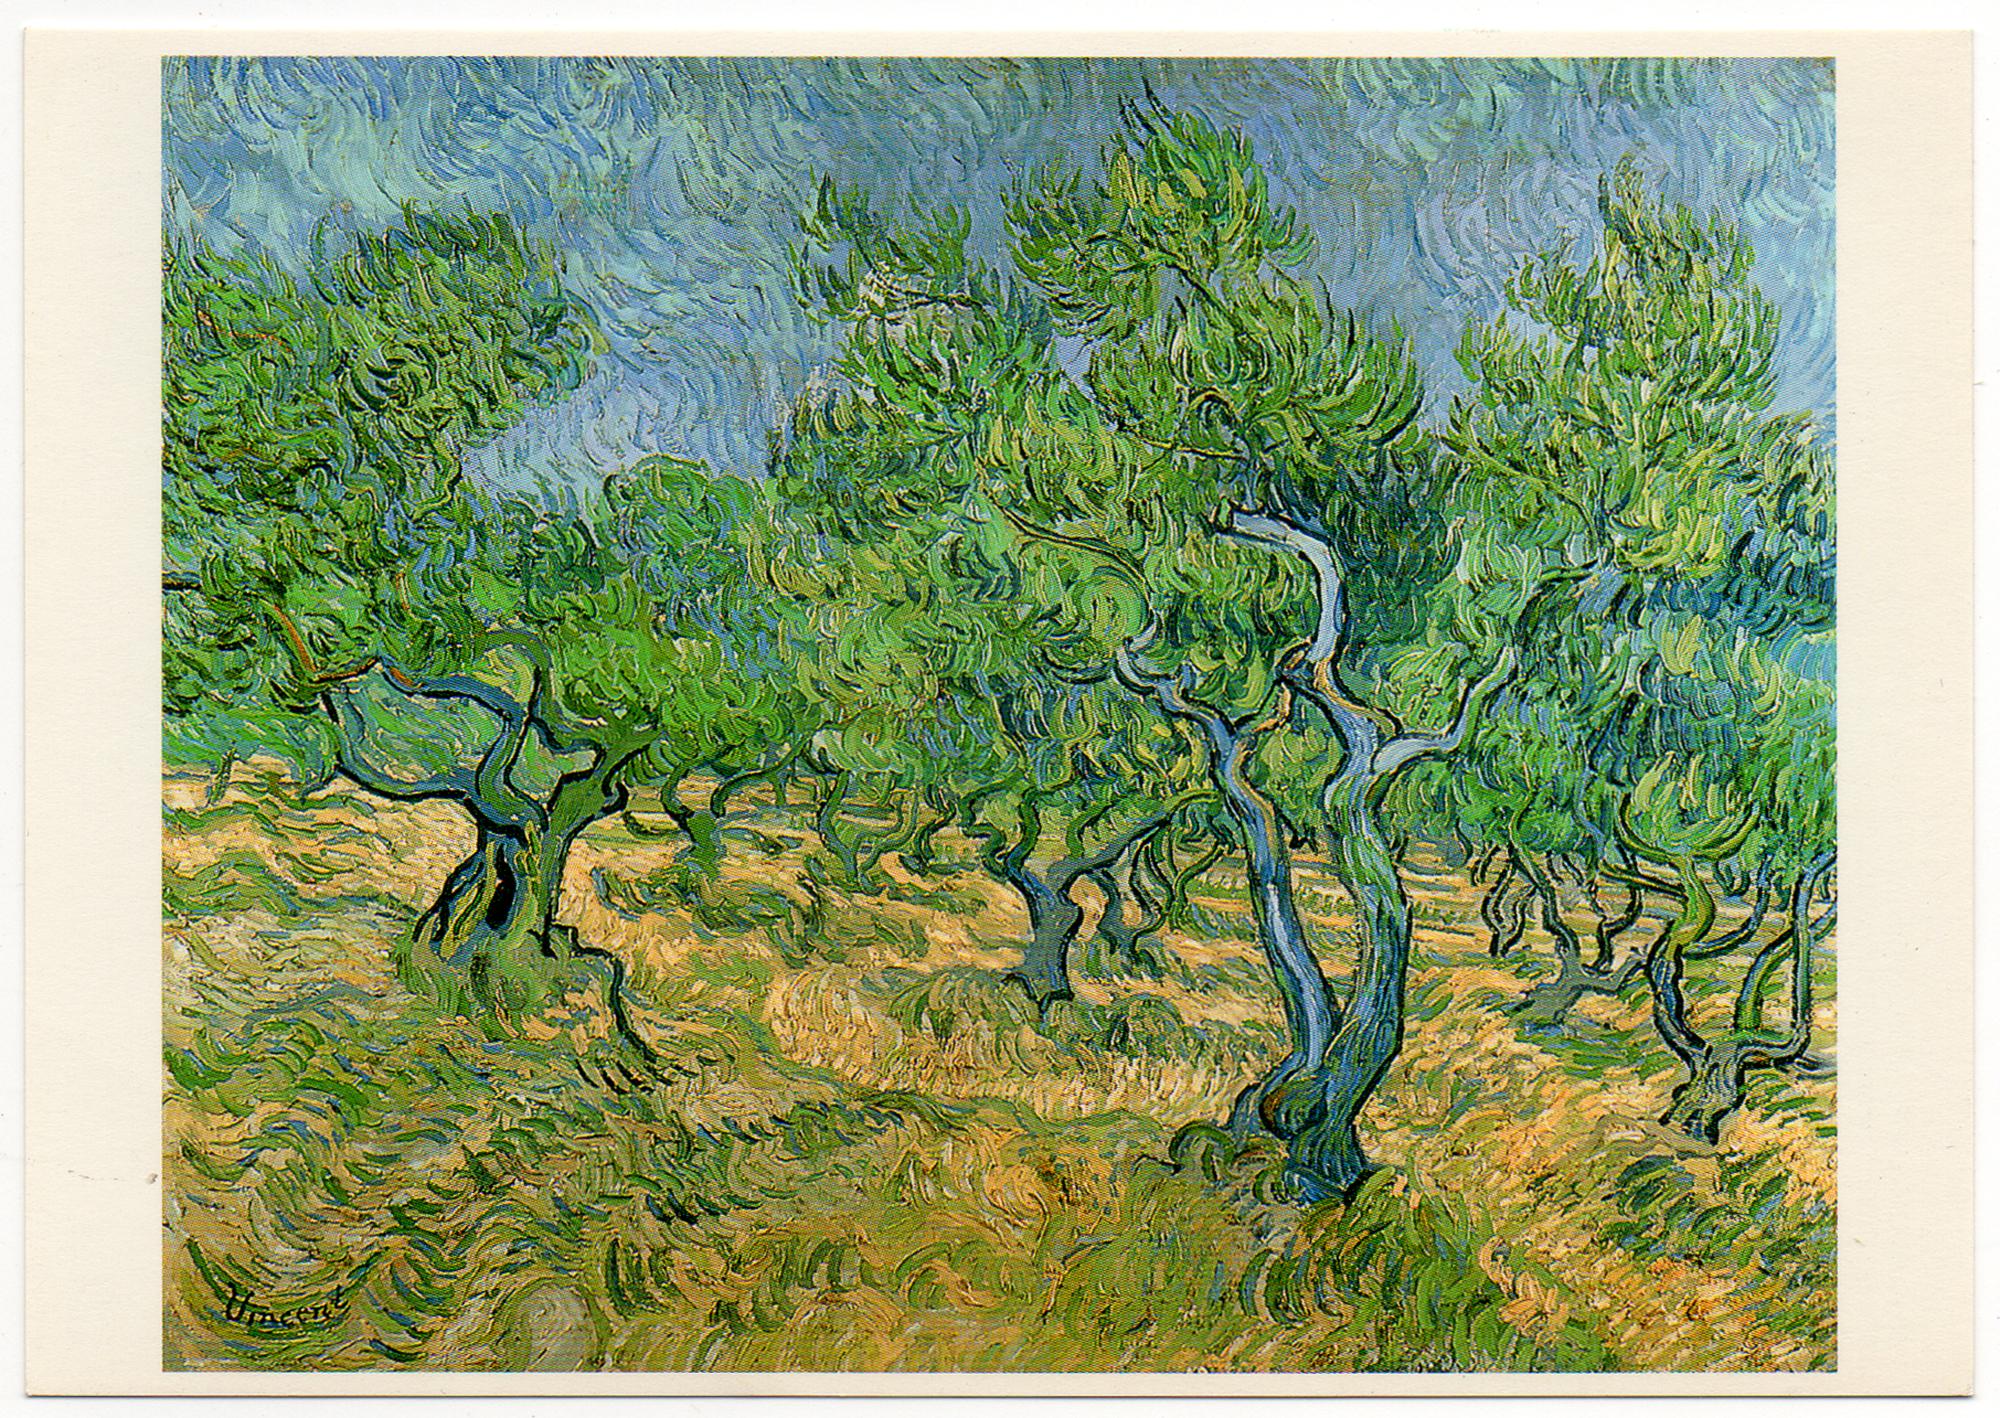 The Netherlands - Postcard Van Gogh